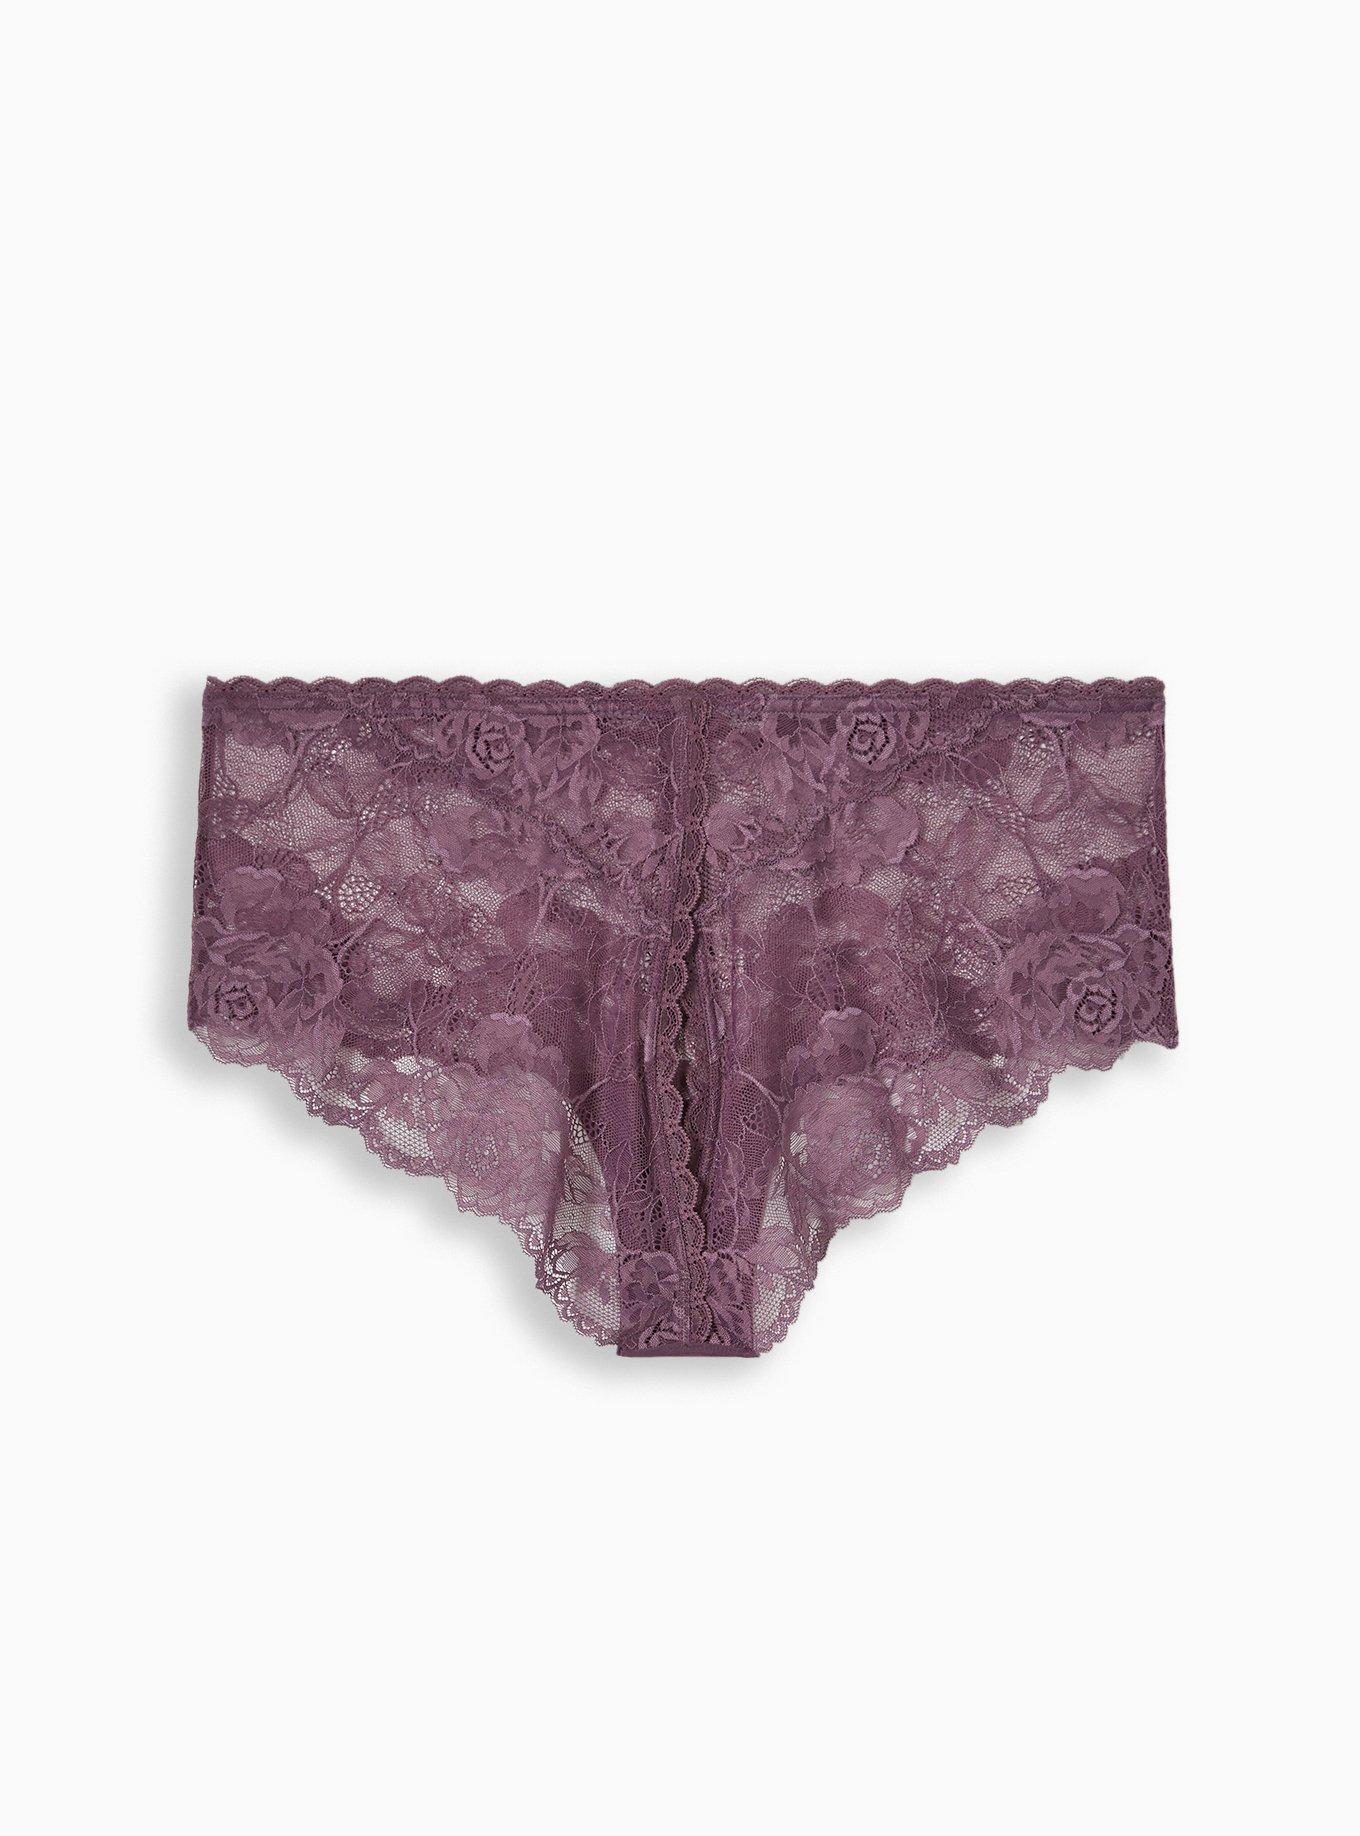 Bebe 3-Pair HIPSTER Underwear Panties Nylon Blend Pink Black Lace womens 1X  for sale online